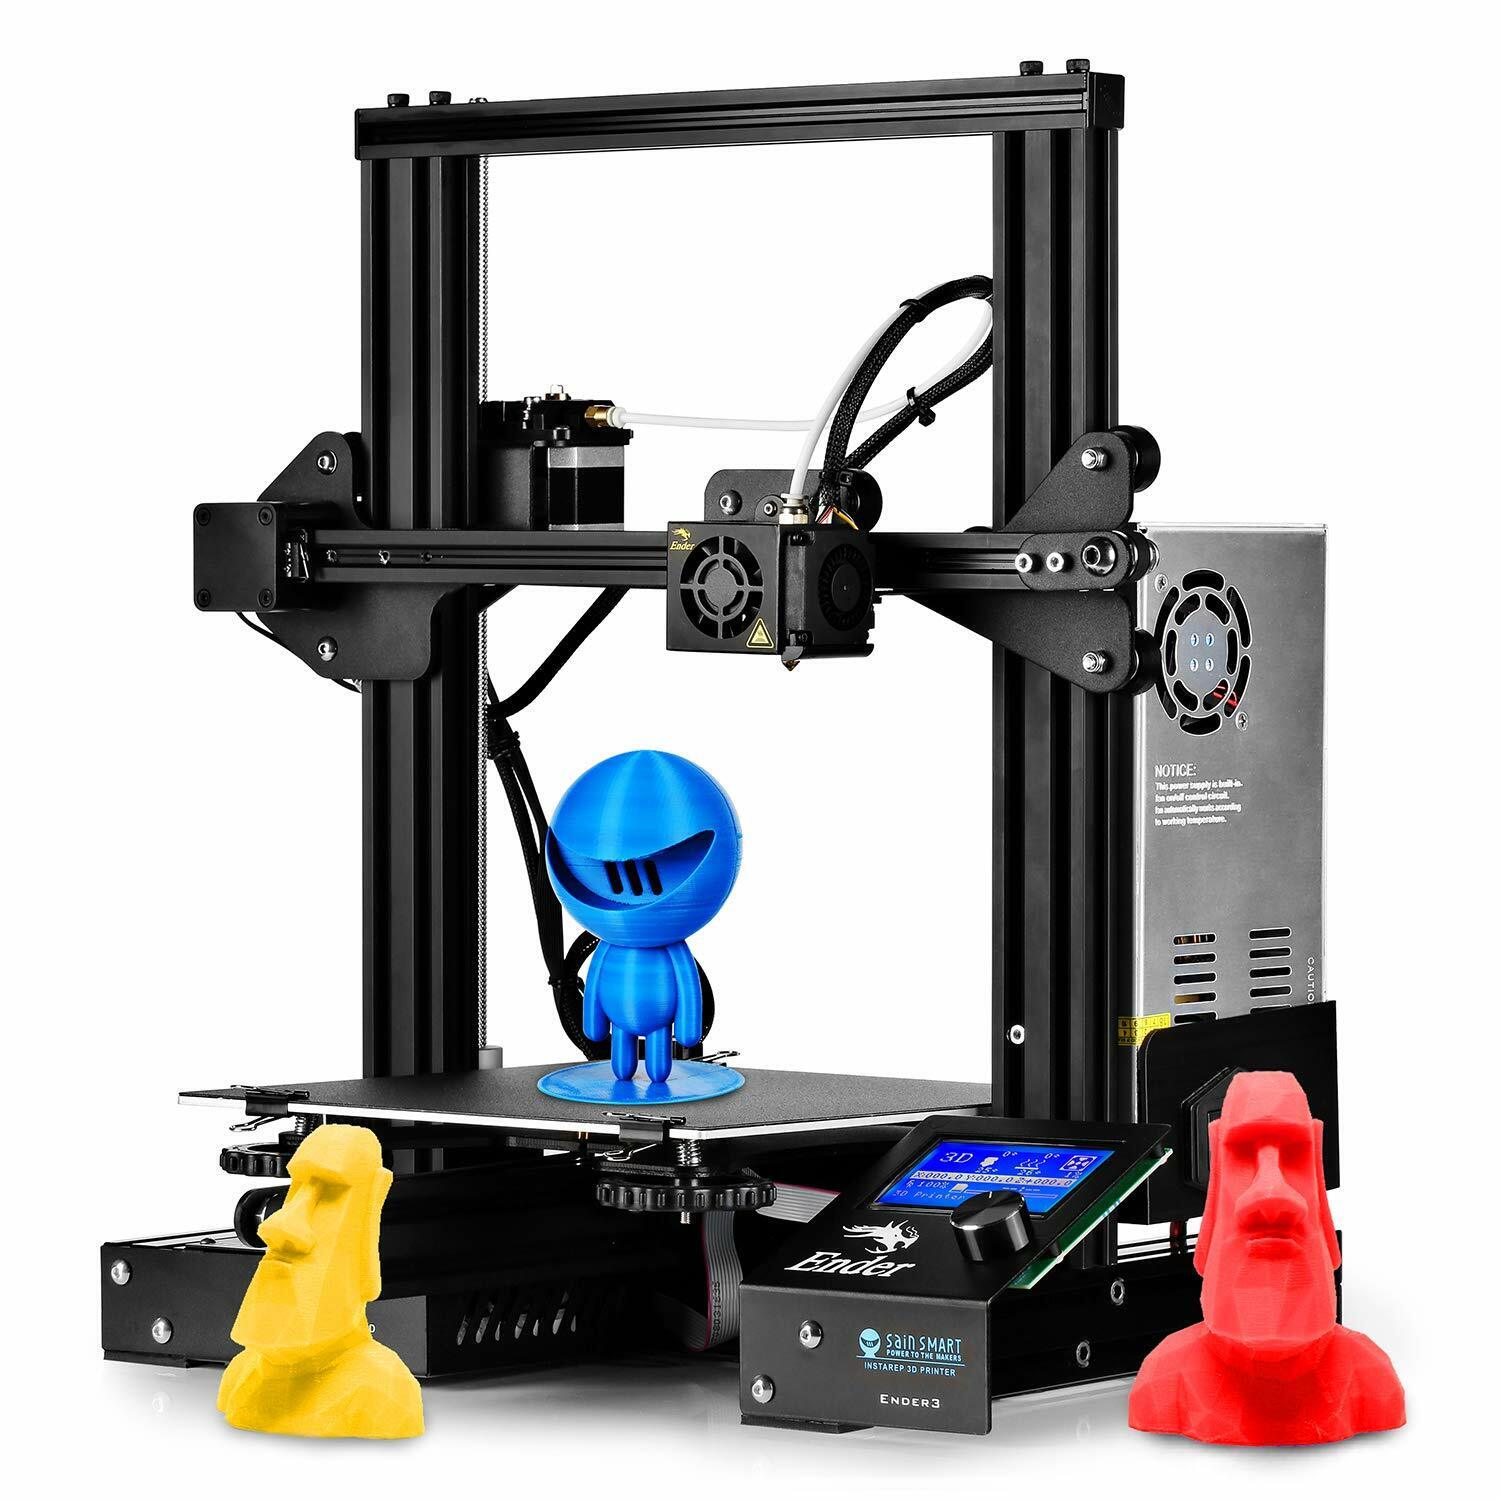 99% NEW Original Creality Ender 3 3D Printer Self Assembled Kit 220X220X250mm US